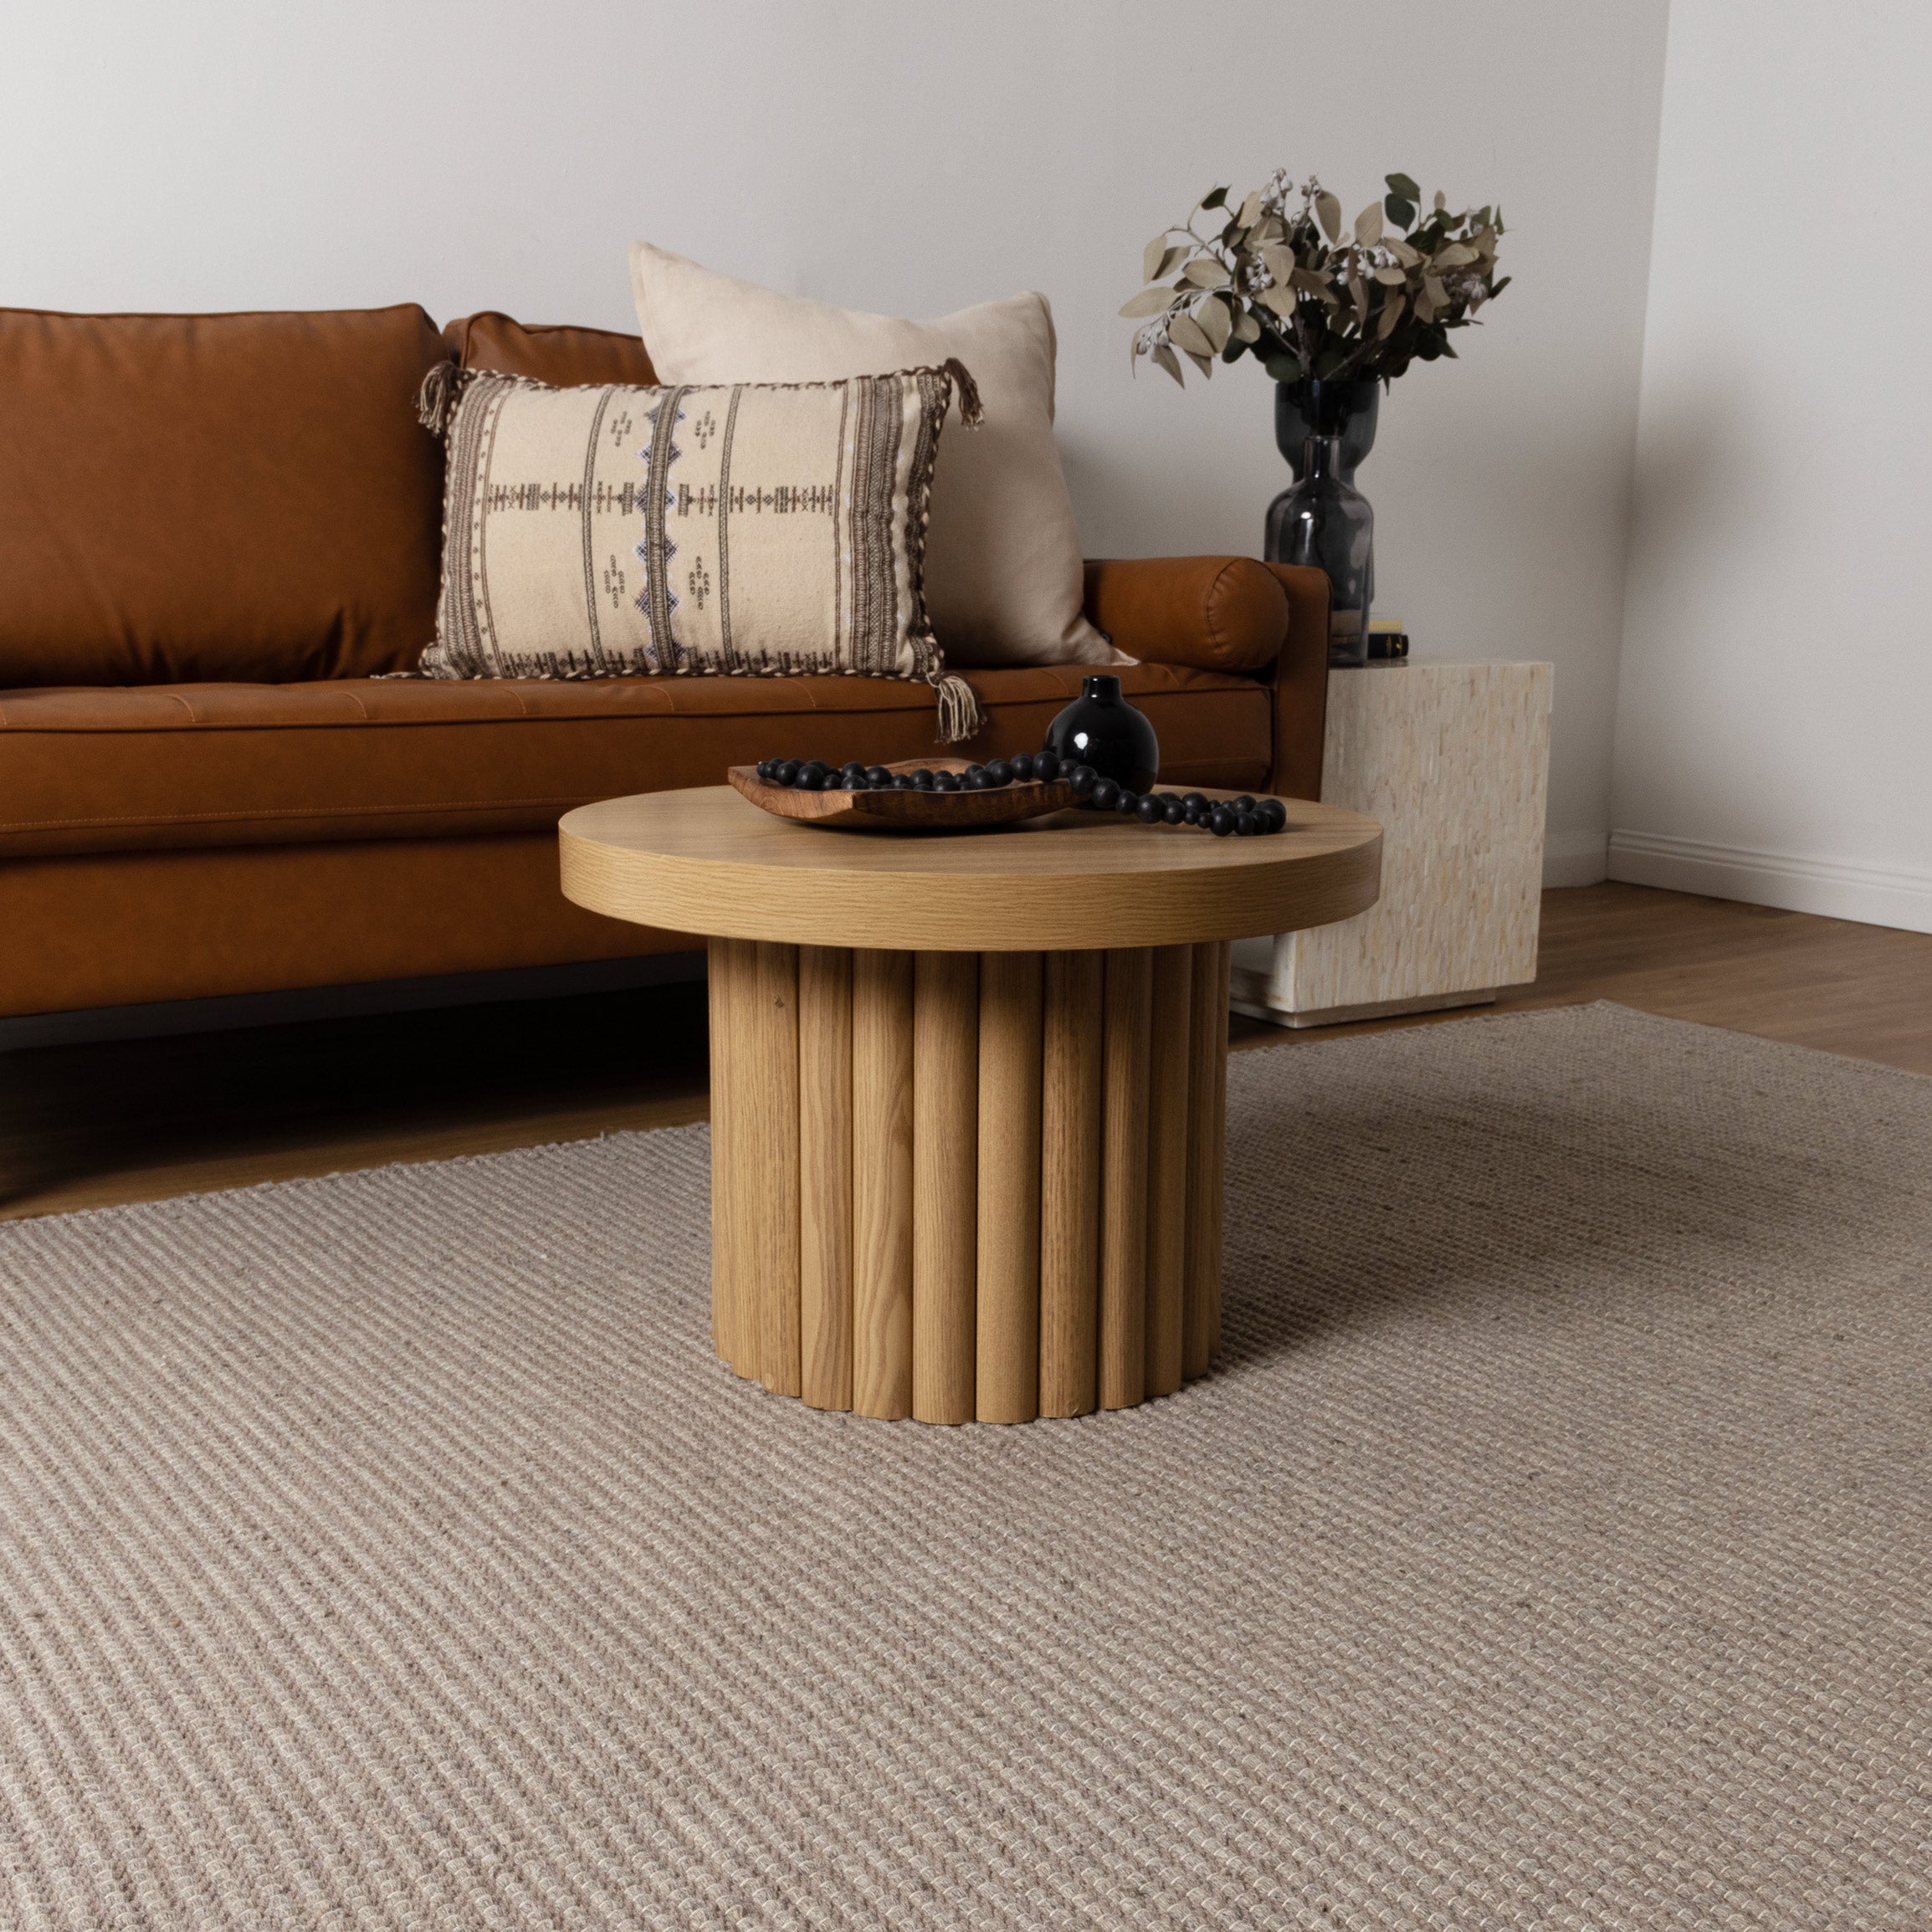 Natura Oatmeal Wool Rug in lounge room with tan sofa